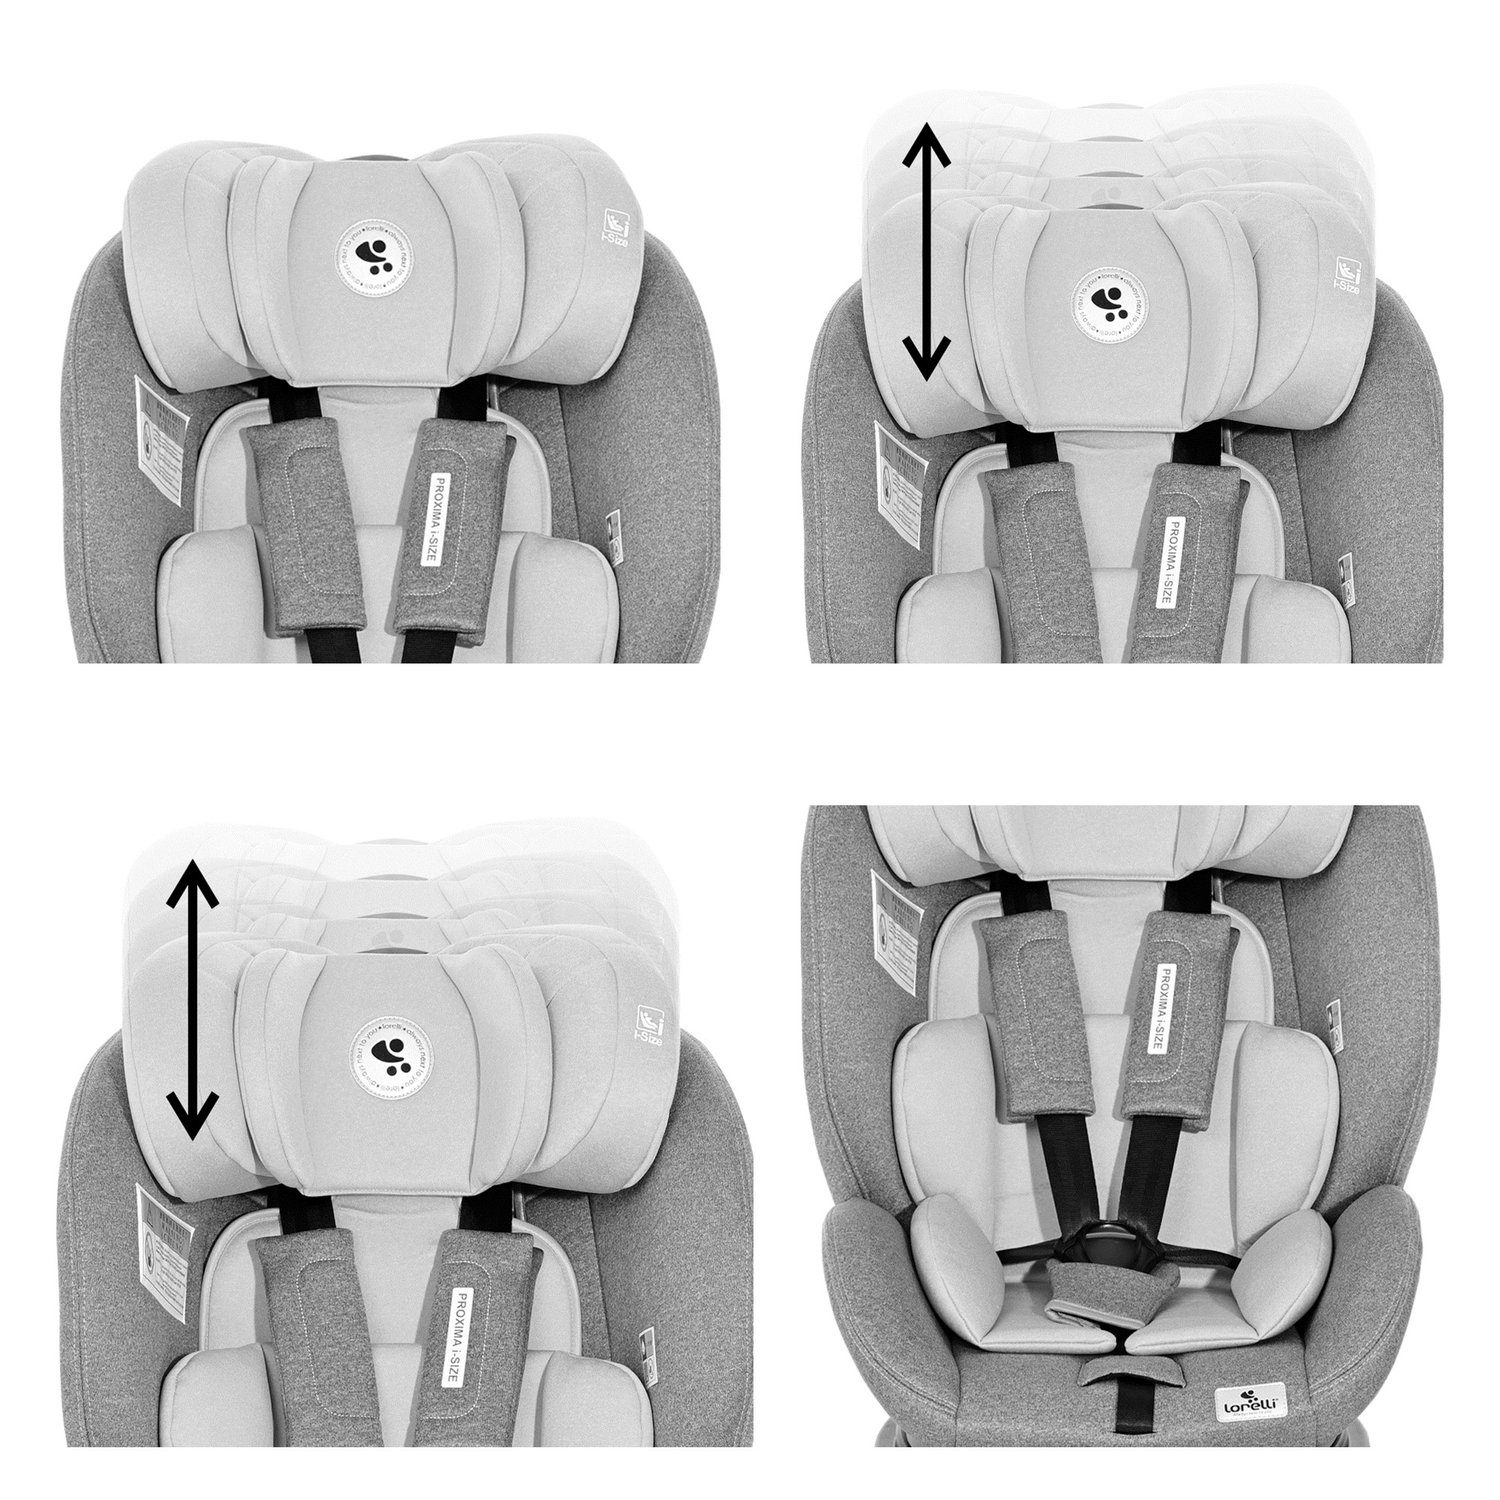 Lorelli Autokindersitz Kindersitz Proxima verstellbar kg) i-Size, grau 0/1/2 25 25 Isofix (0 kg, bis: - Gruppe